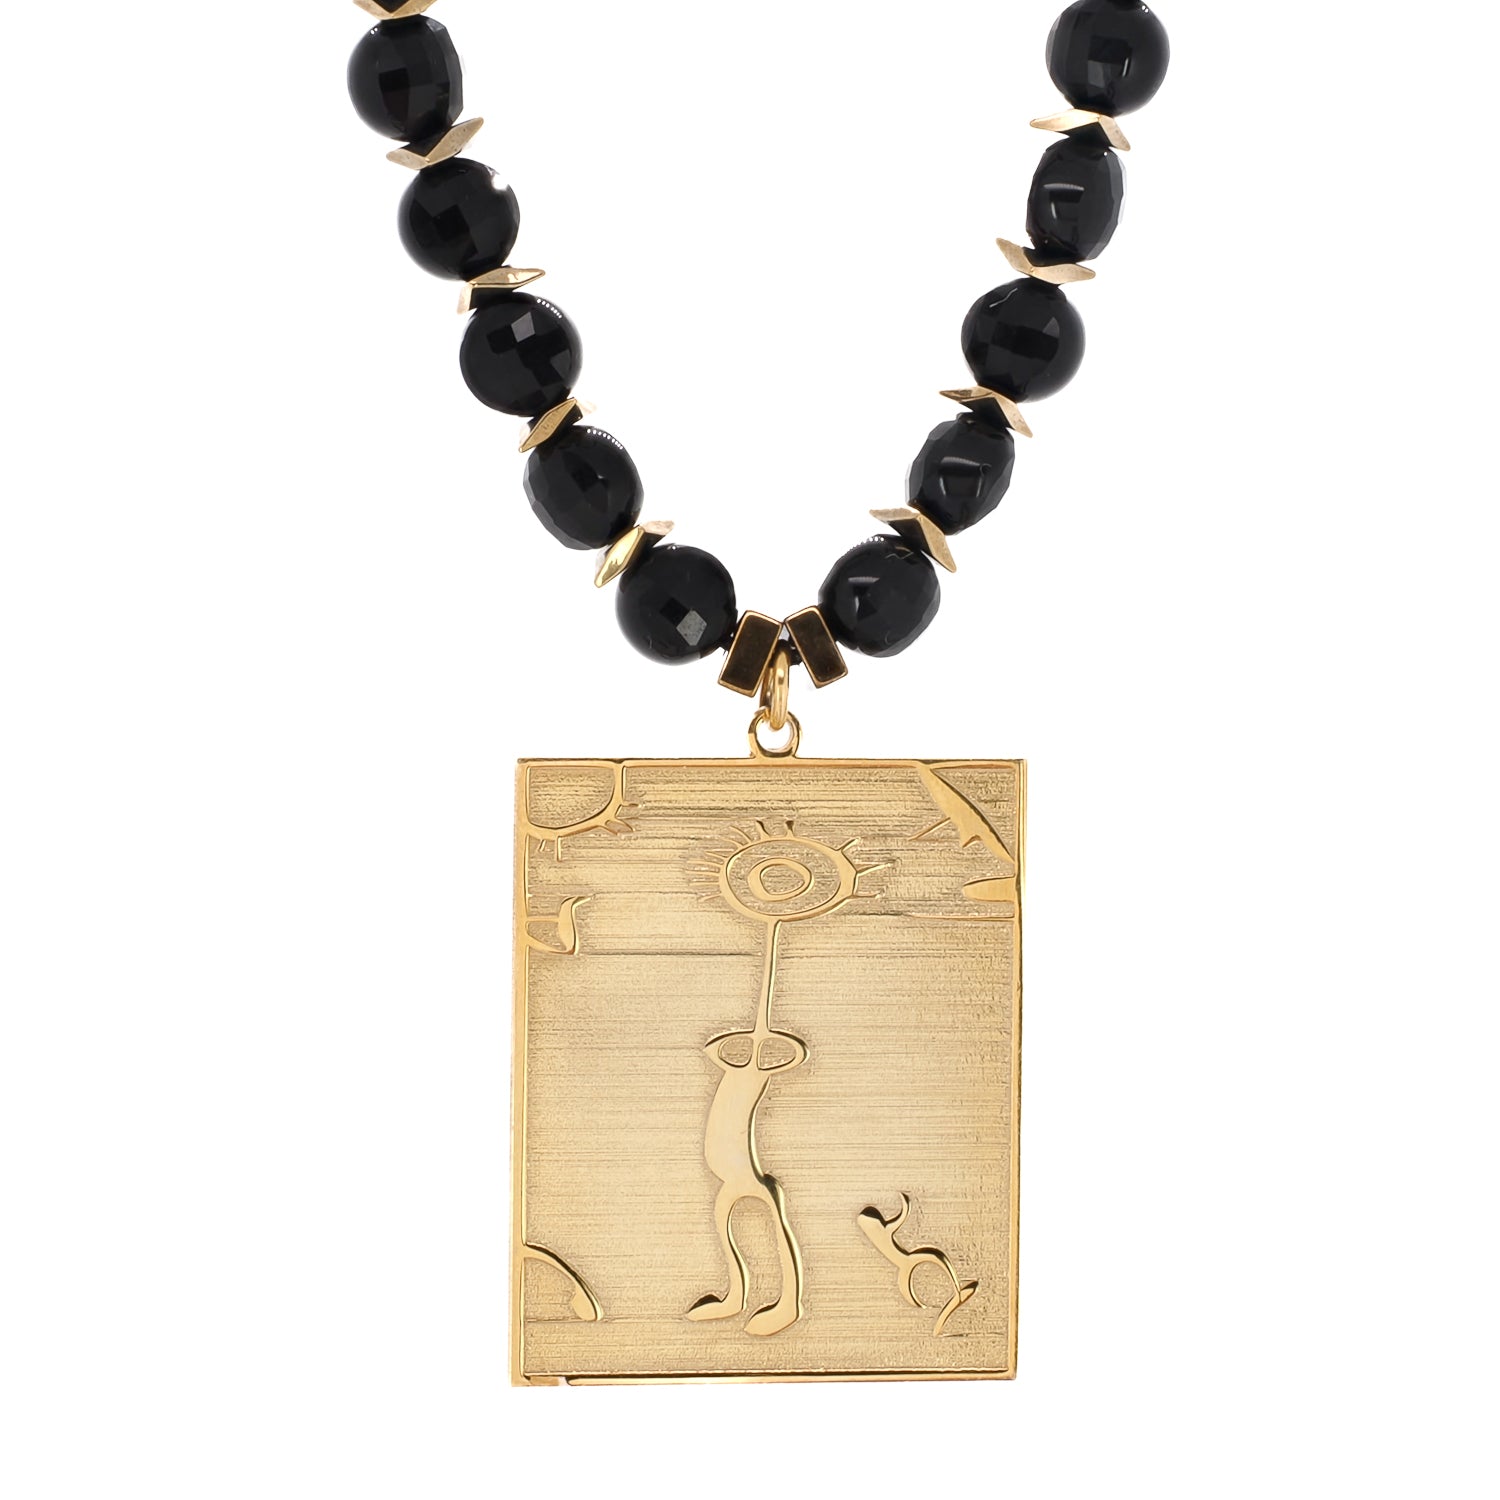 Shamanic Magic Sun Necklace - A Beautiful Handmade Jewelry Piece with Onyx Stones and Native American Symbols.